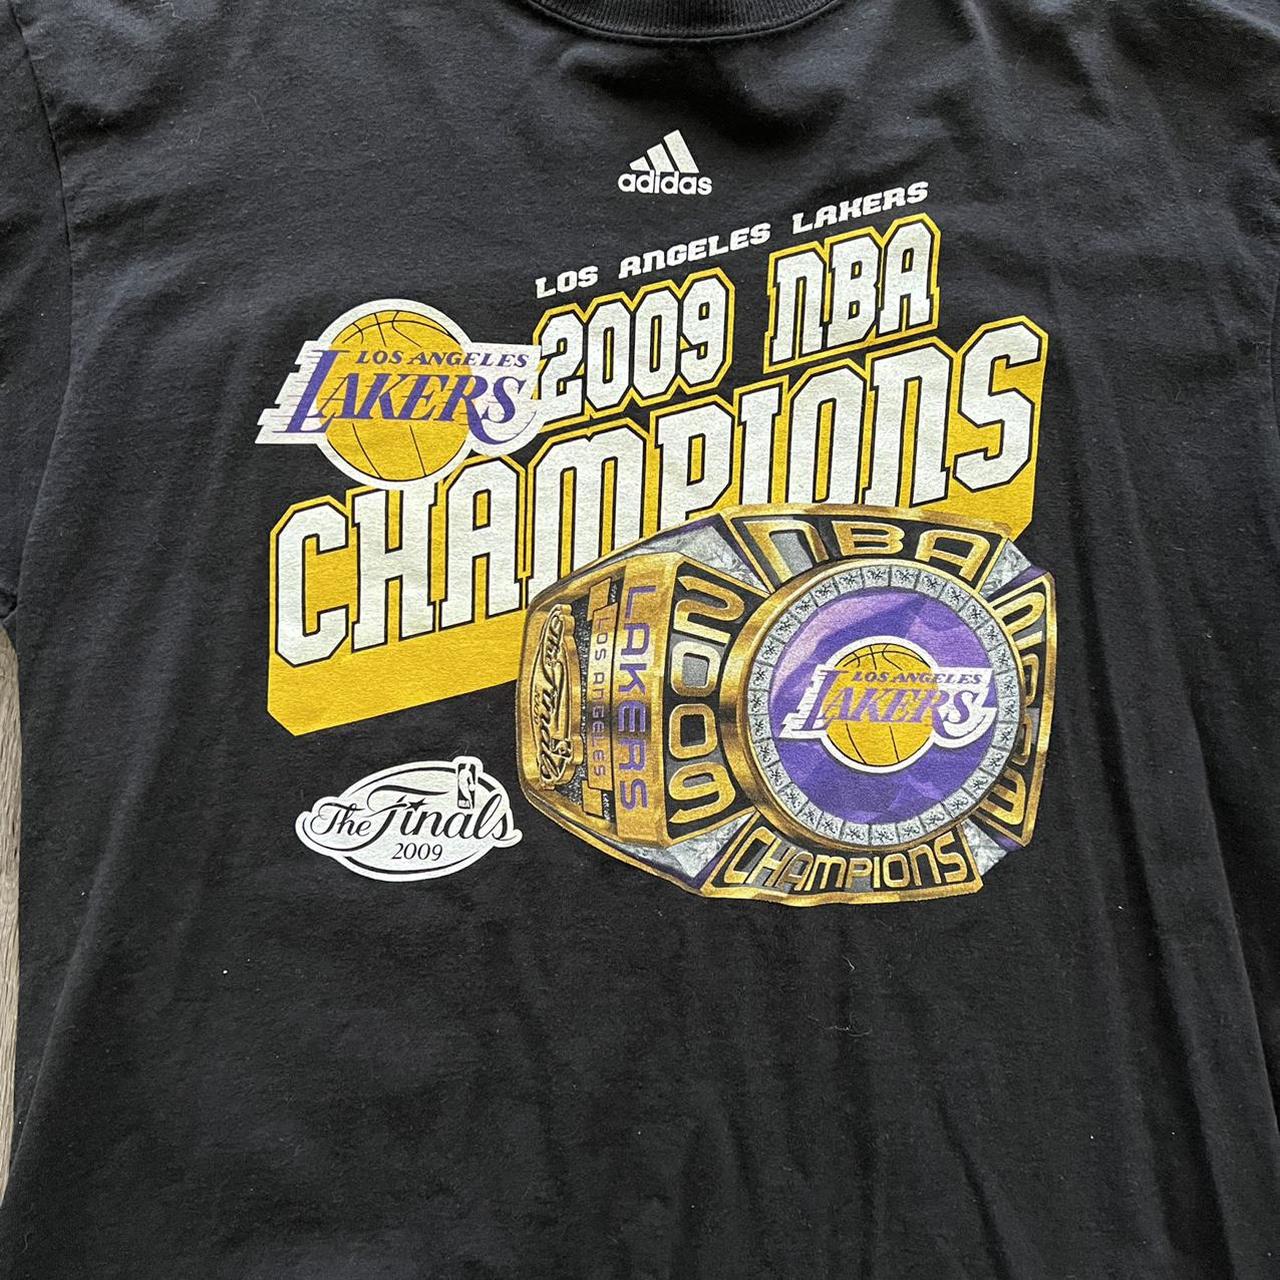 Product Image 2 - Lakers 2009 championship T-shirt size